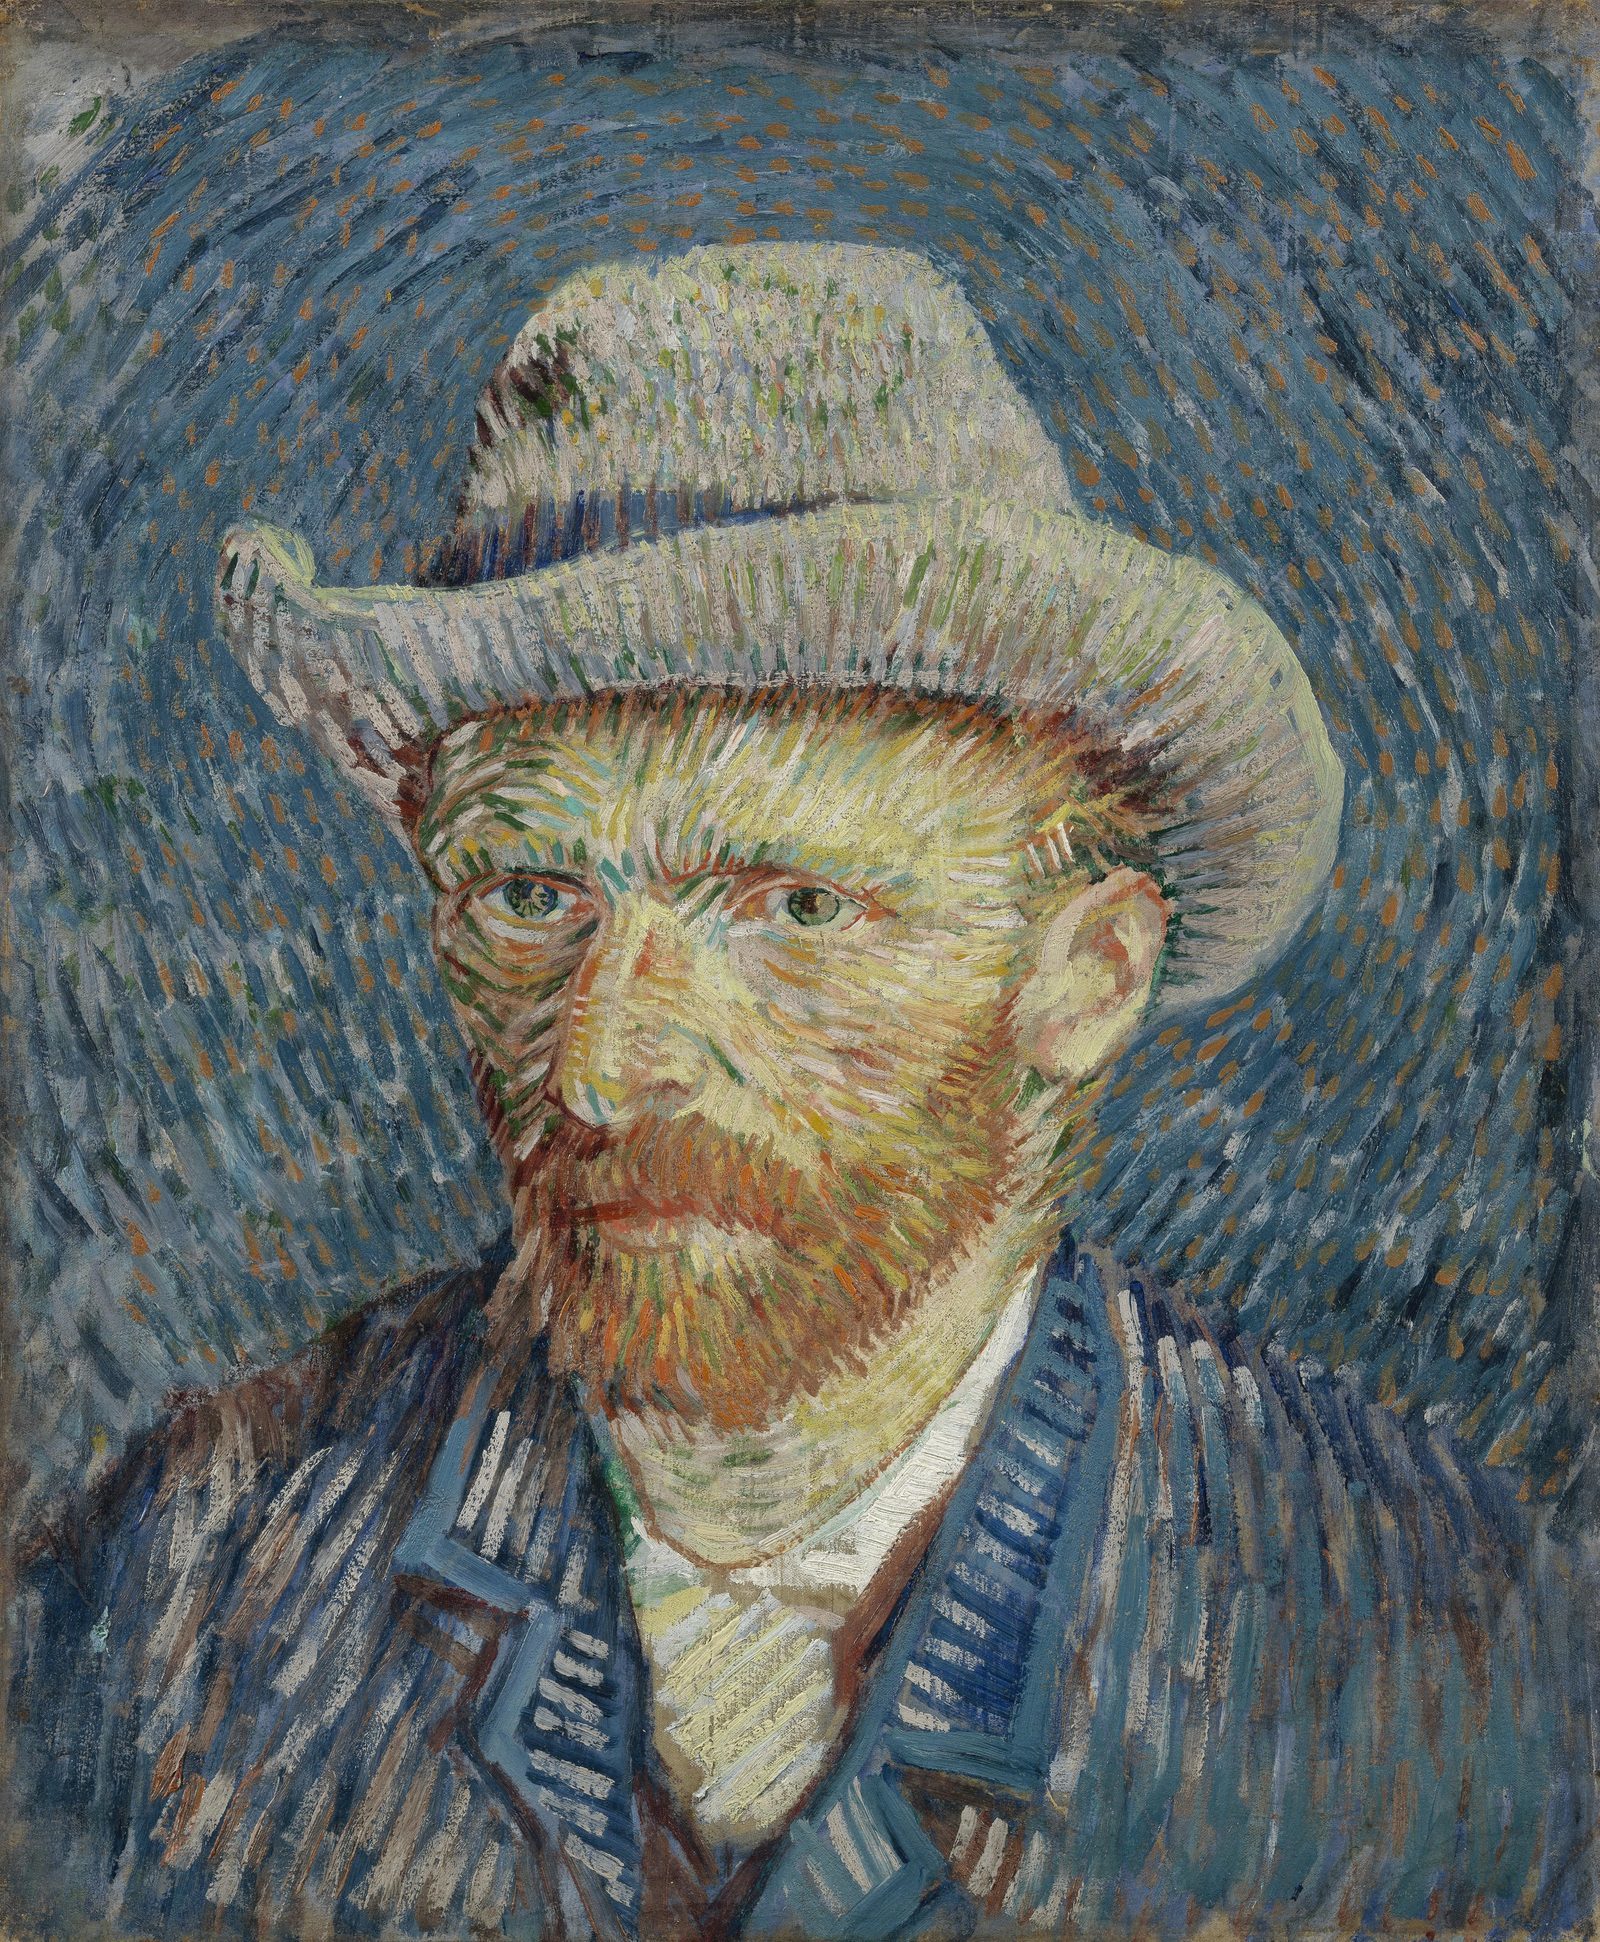 Van Gogh Museum, Amsterdam